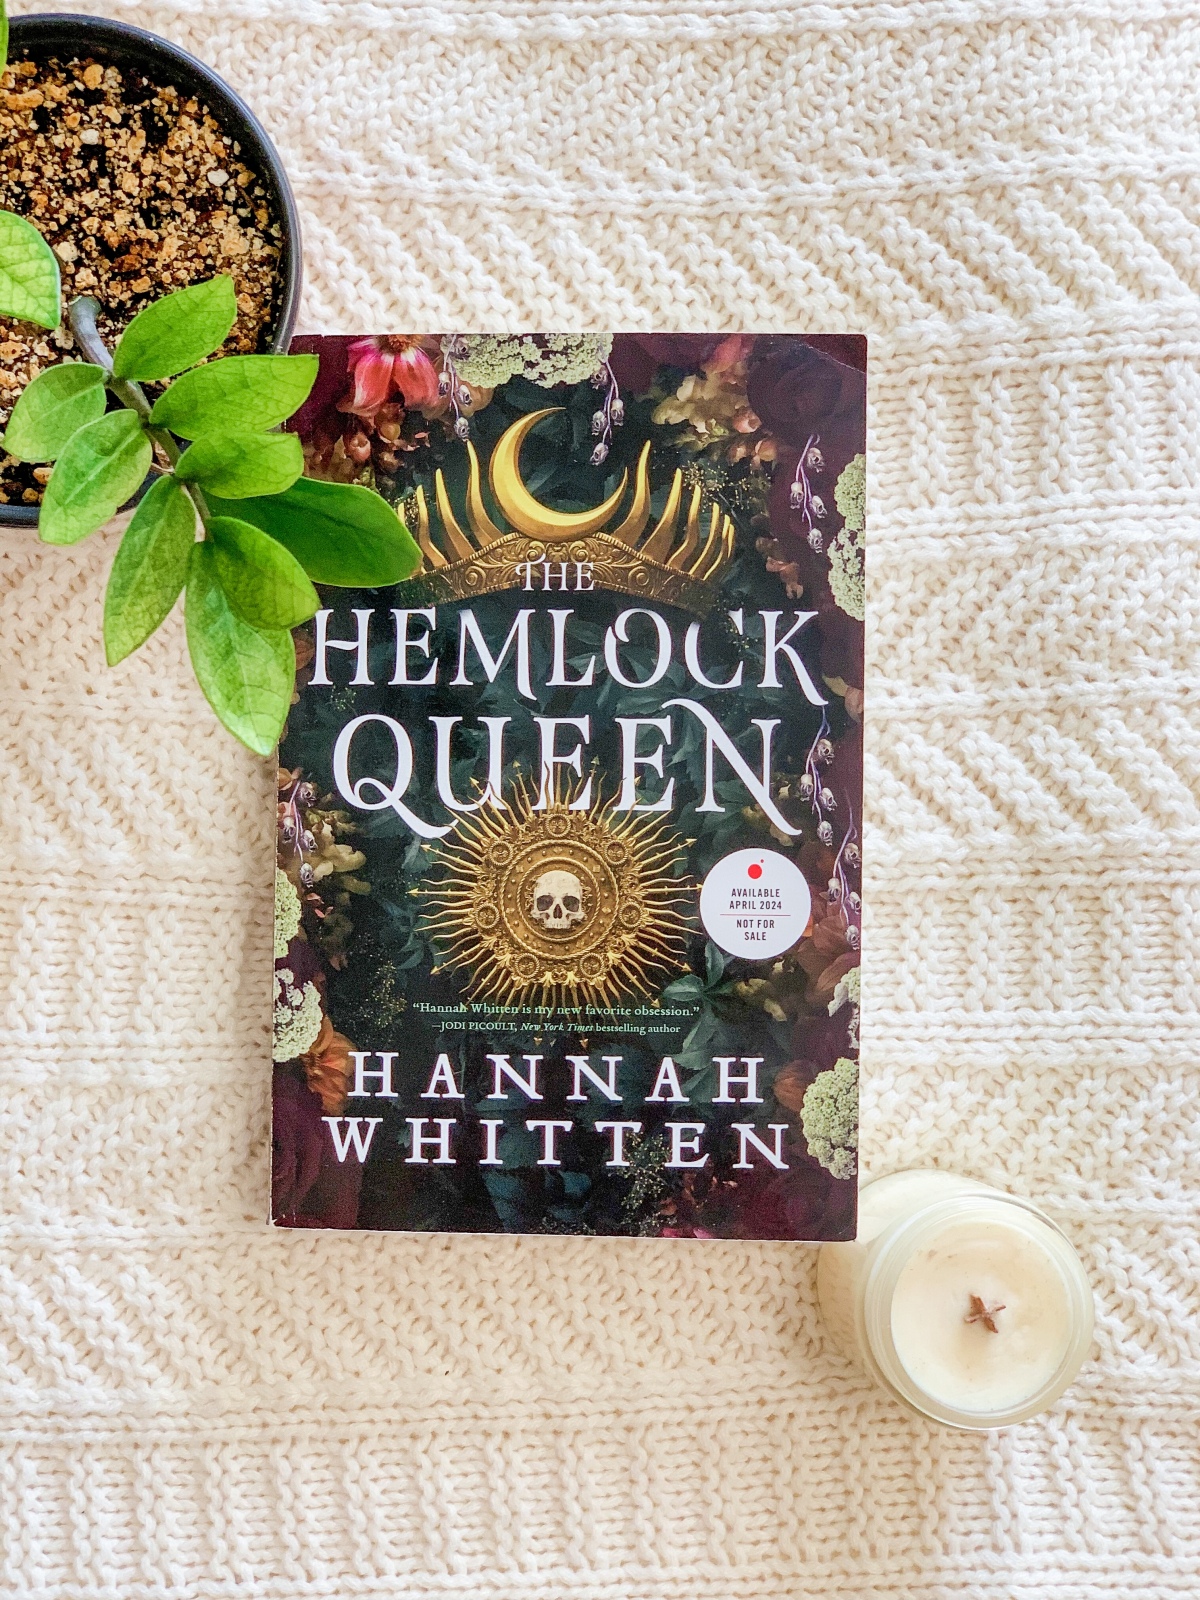 The Hemlock Queen by Hannah Whitten